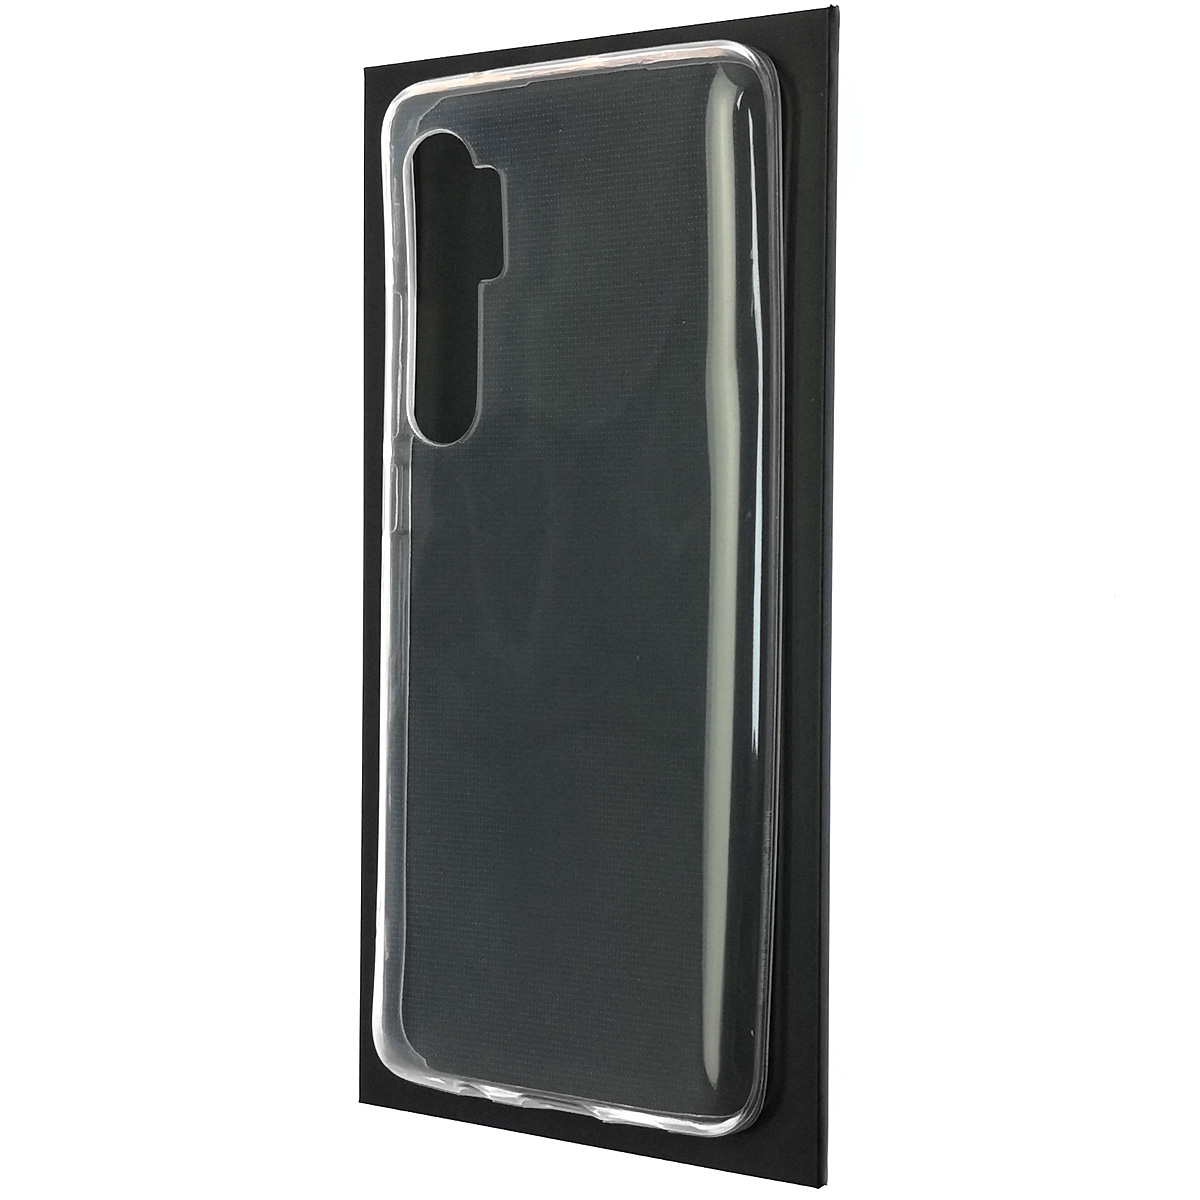 Чехол накладка TPU CASE для XIAOMI Mi Note 10 Lite, силикон, цвет прозрачный